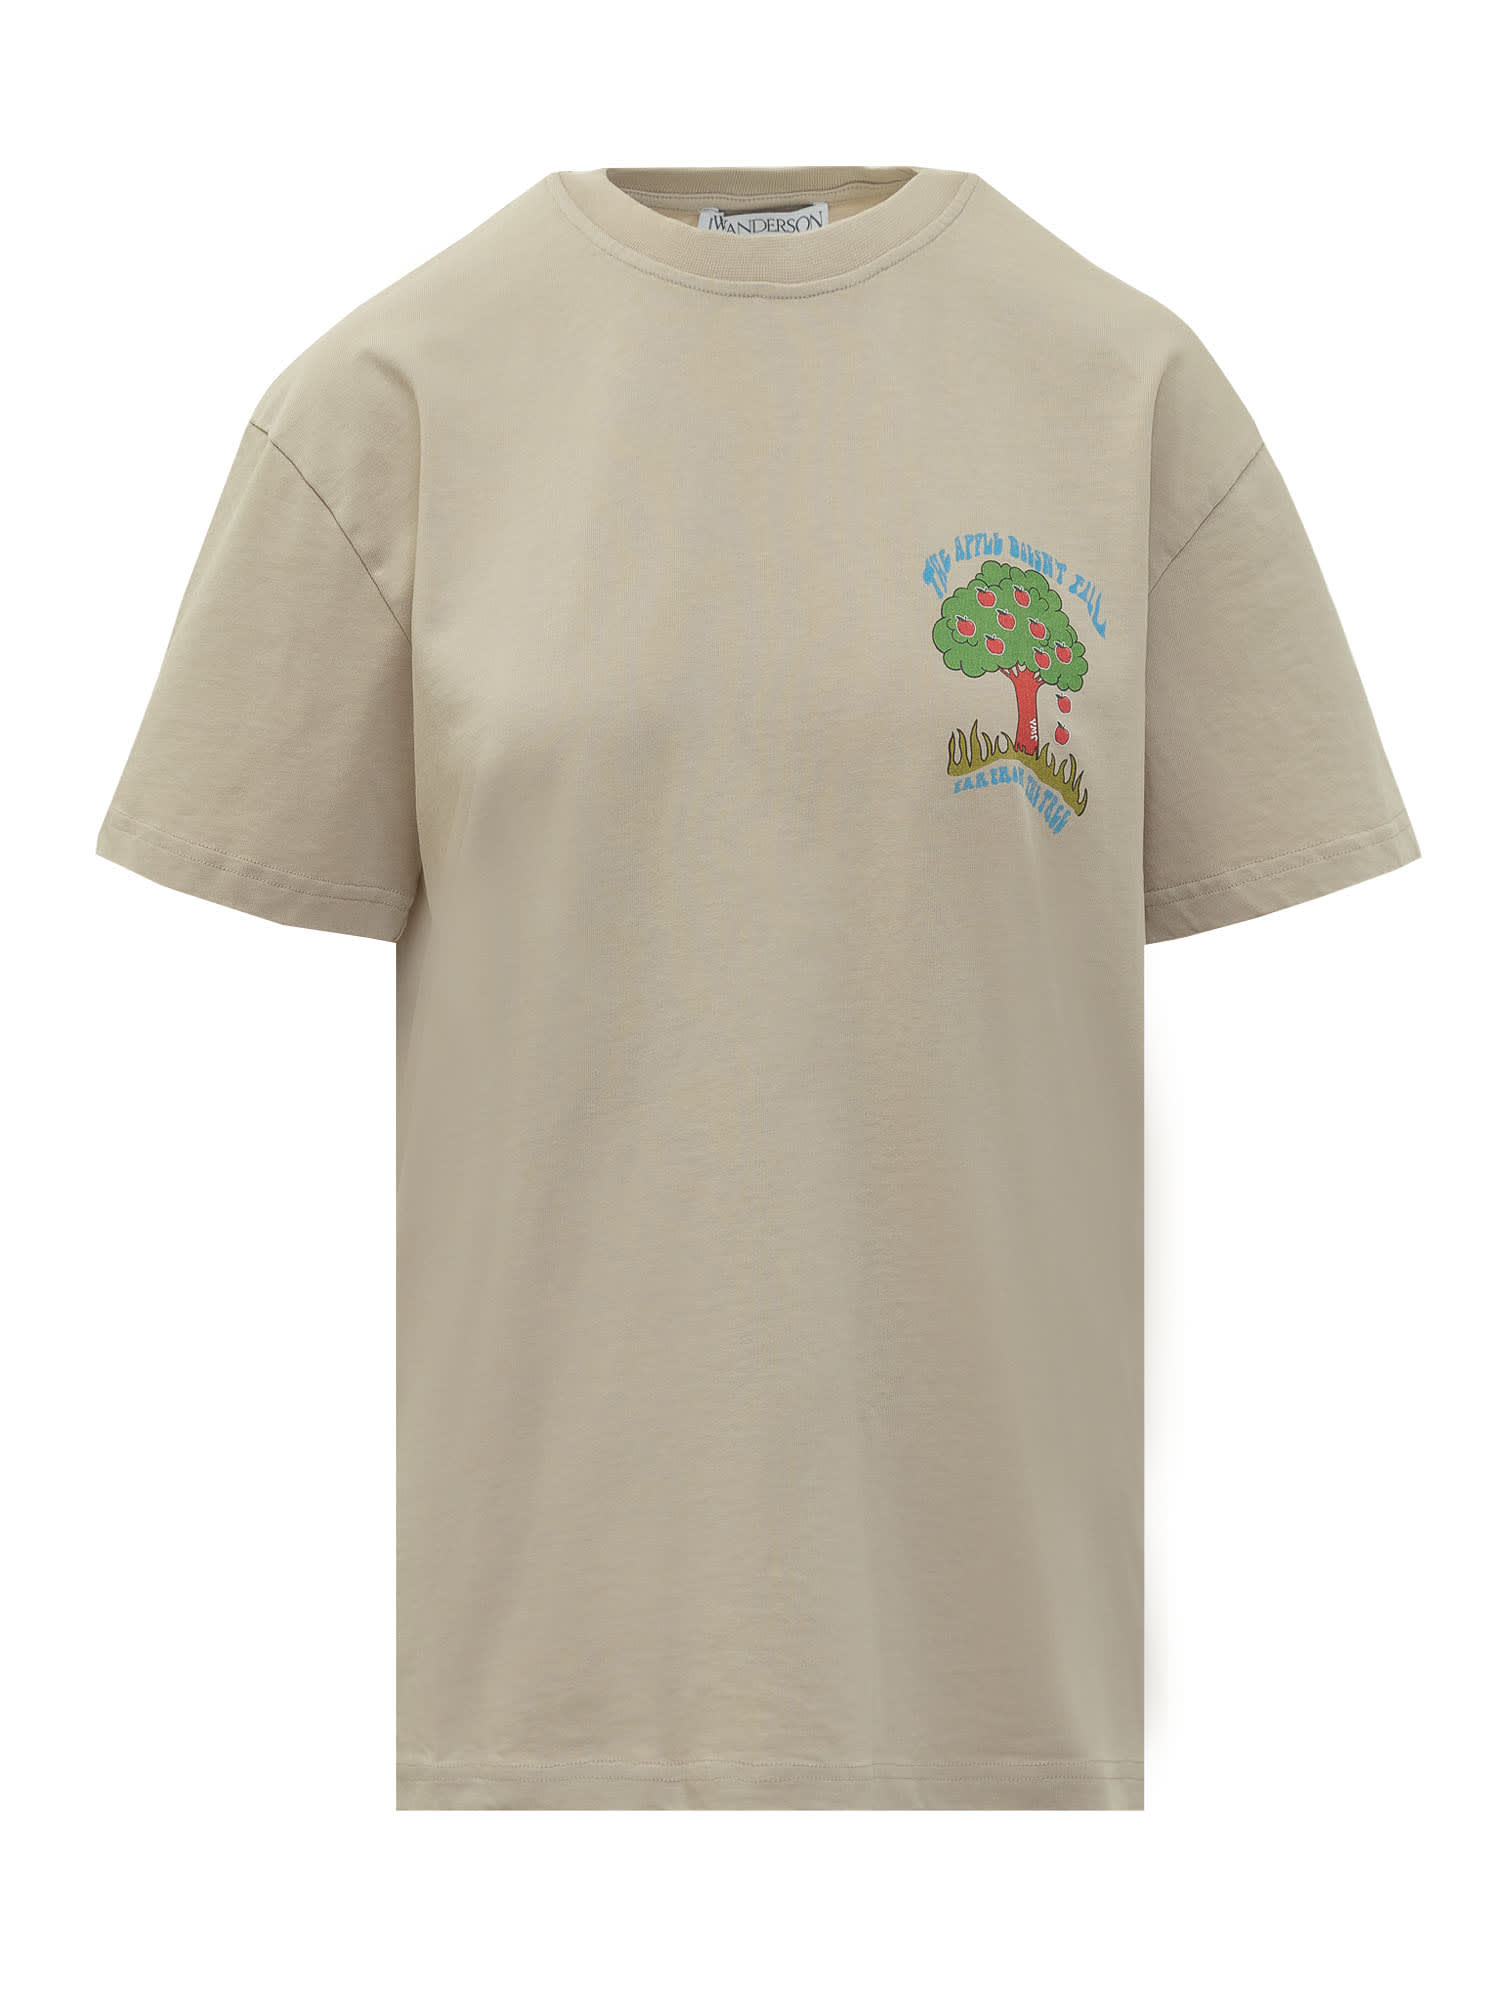 J.W. Anderson Apple Tree Logo T-shirt